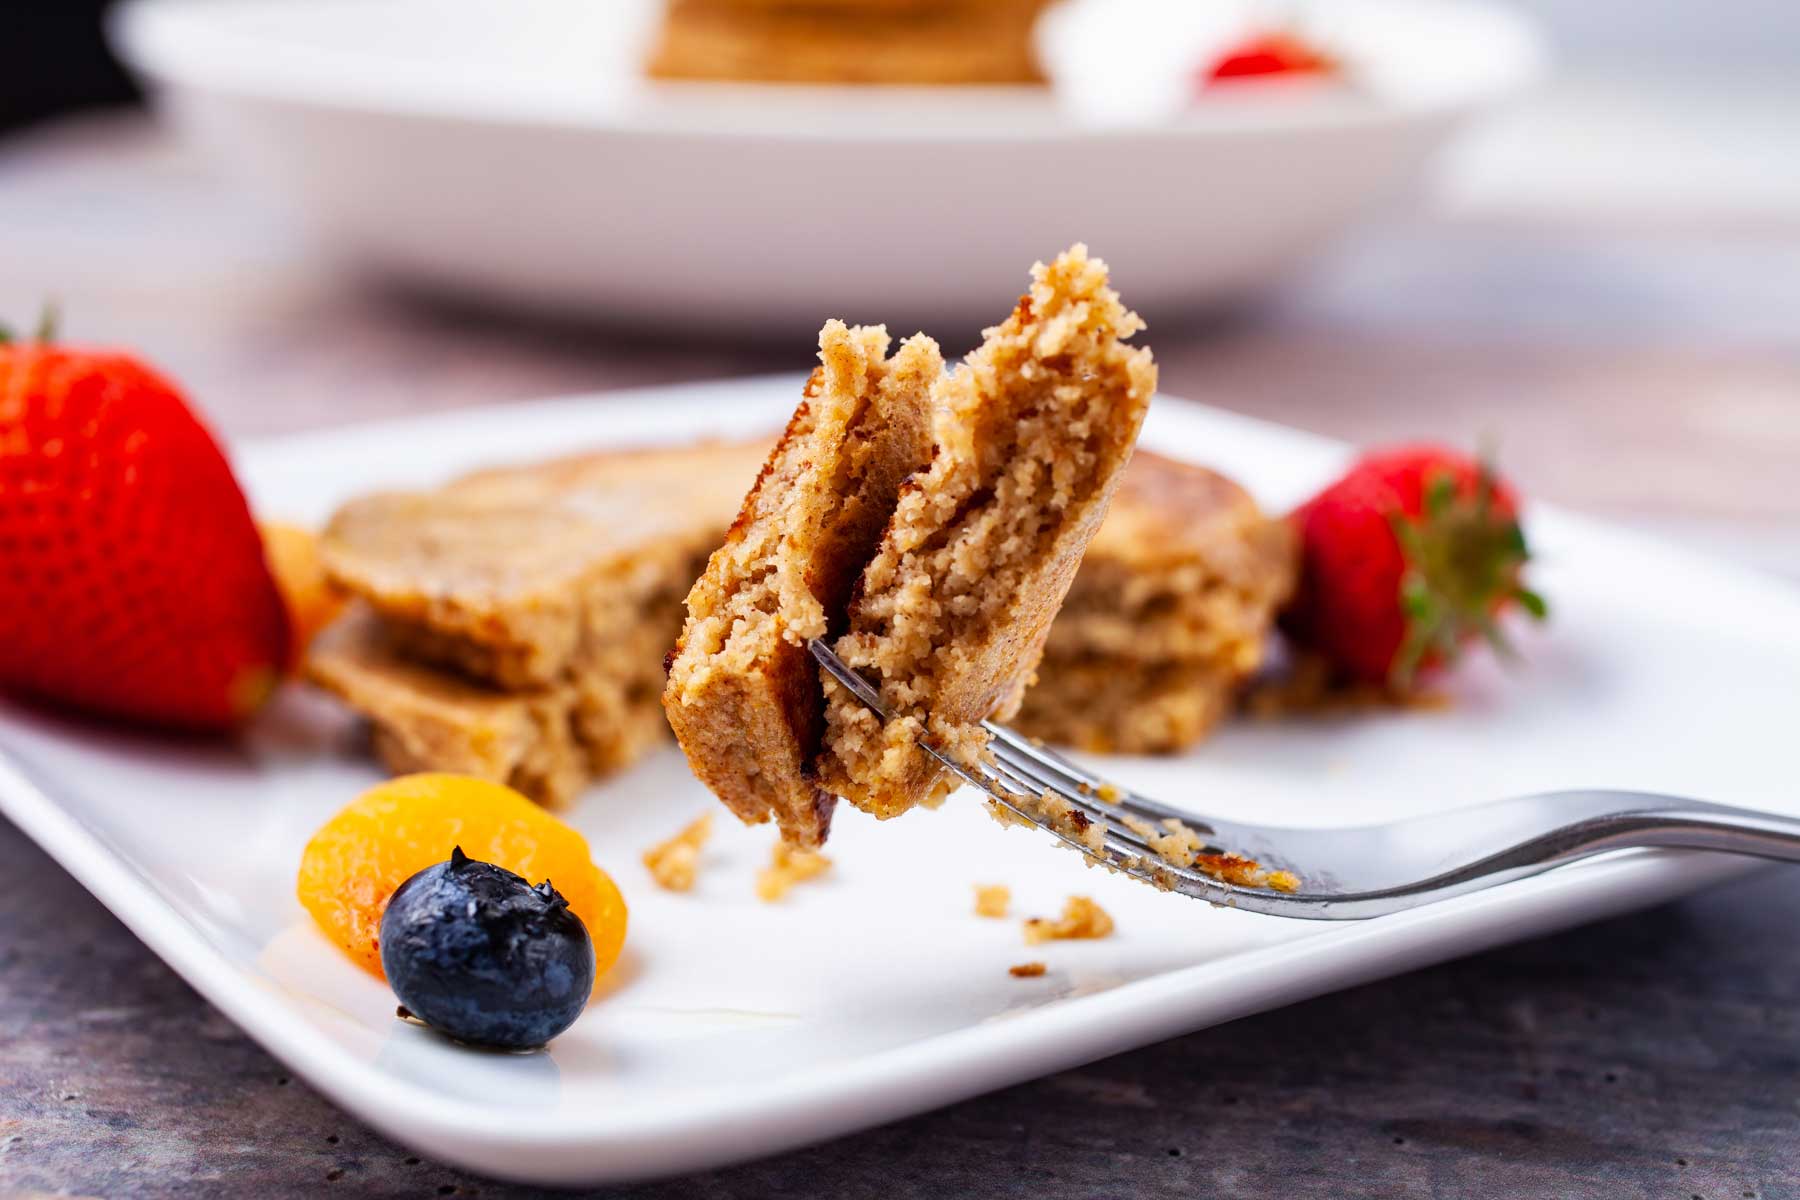 A fork-full of oat flour pancake resting on a plate.